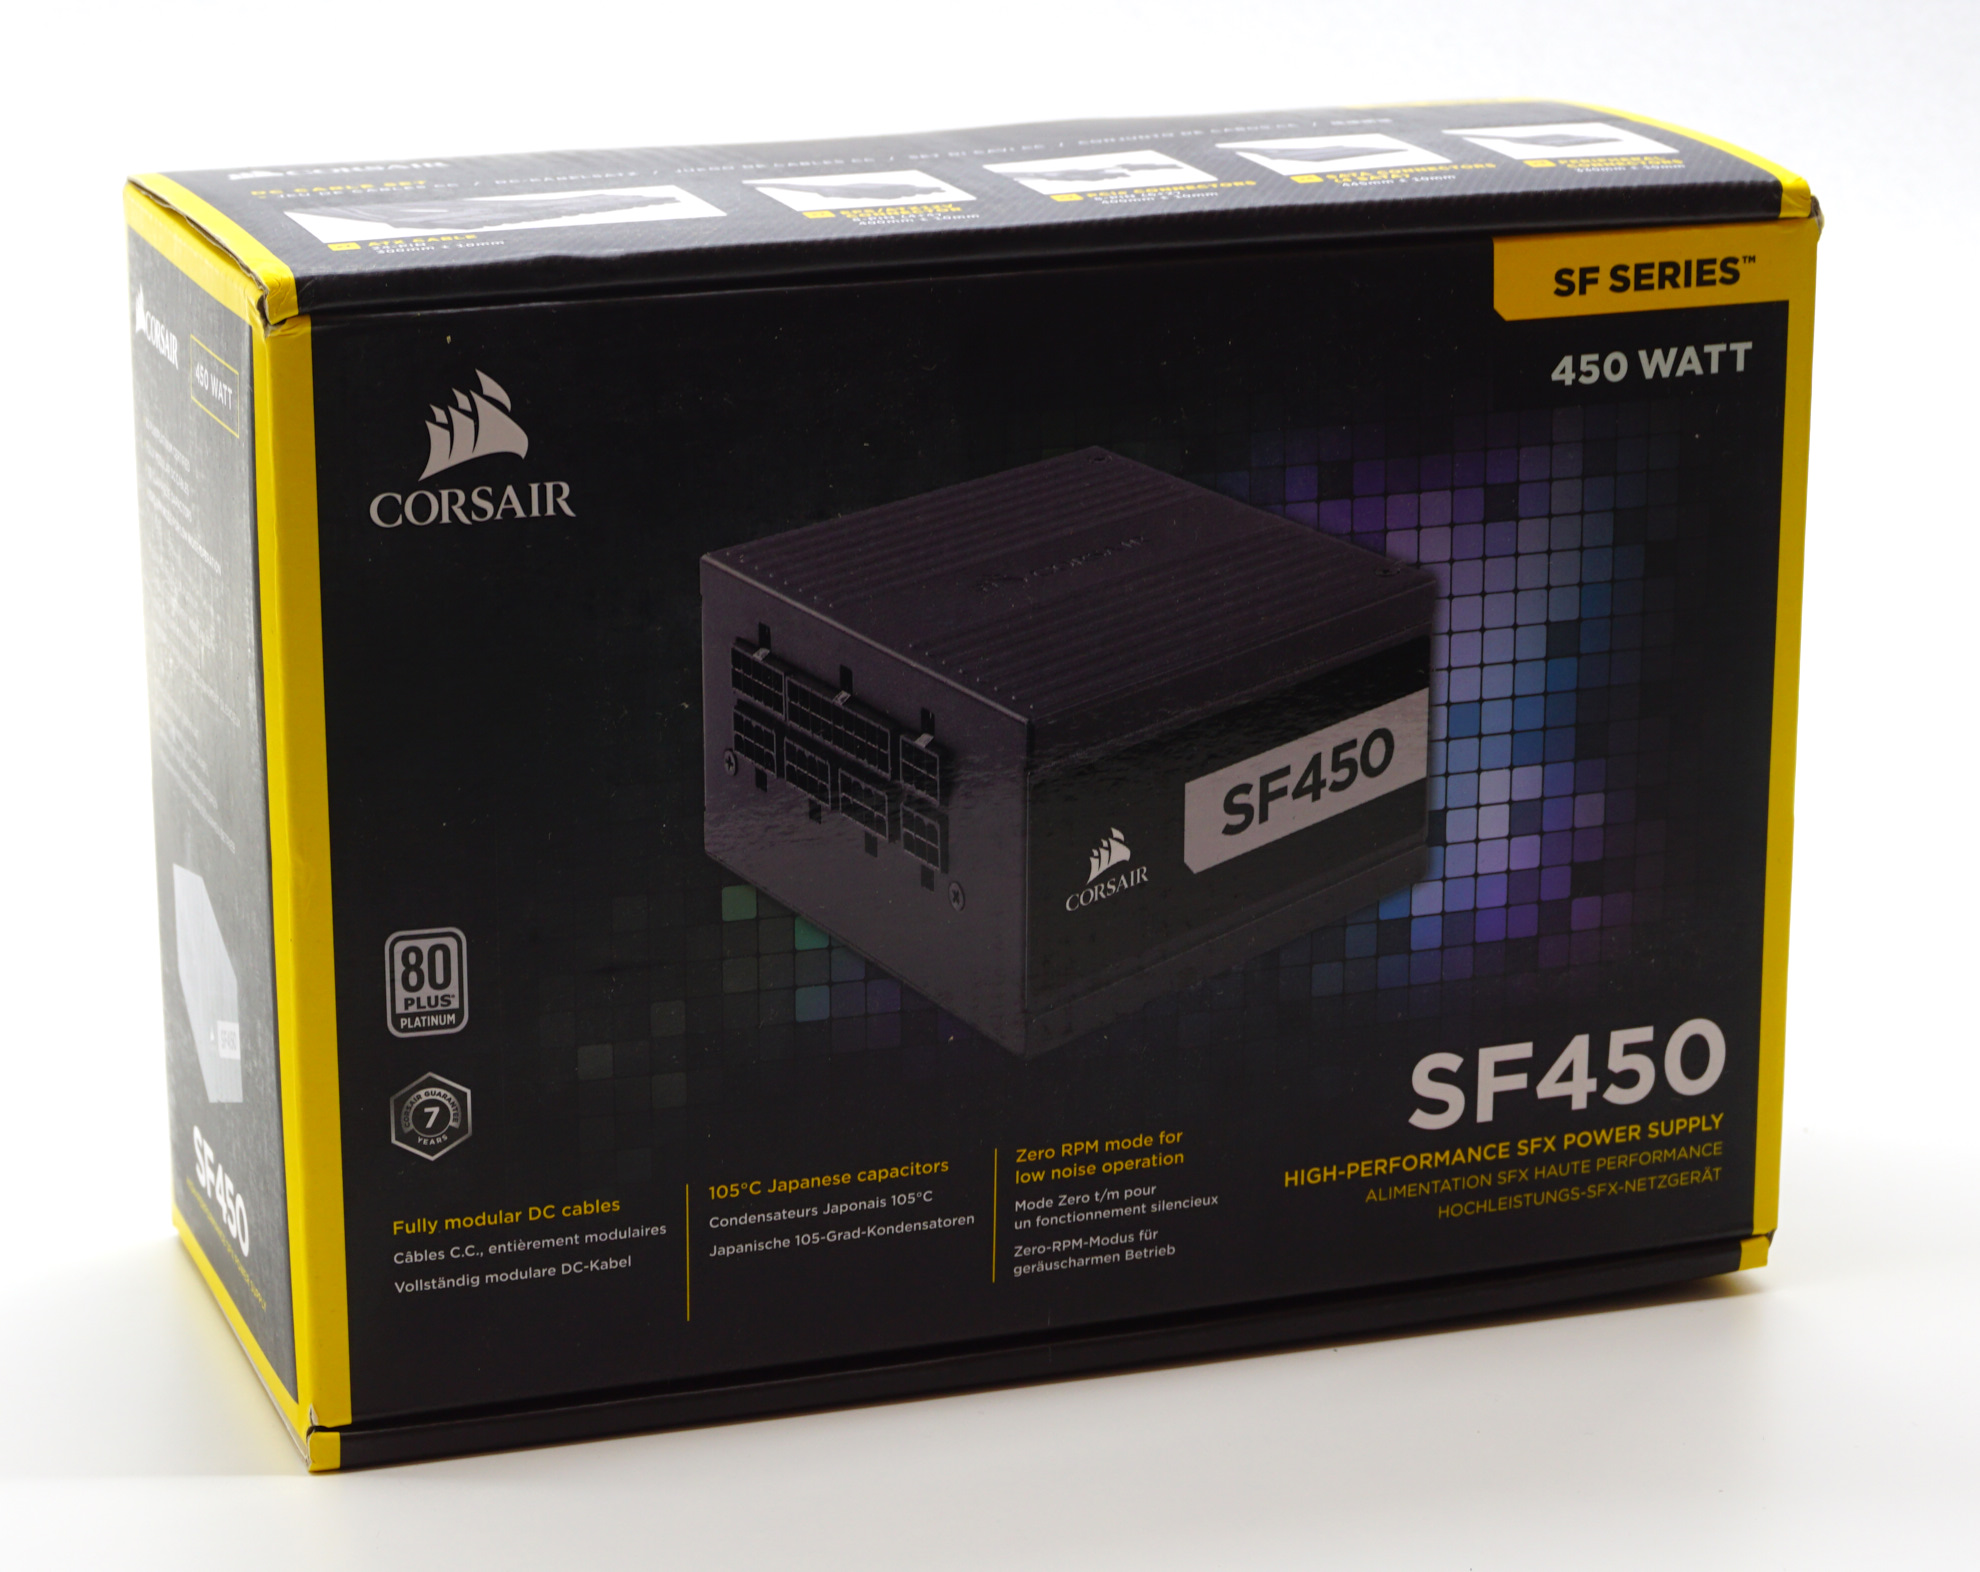 The SF450 Platinum SFX Review: Corsair's Best SFF PSU Gets Even Better